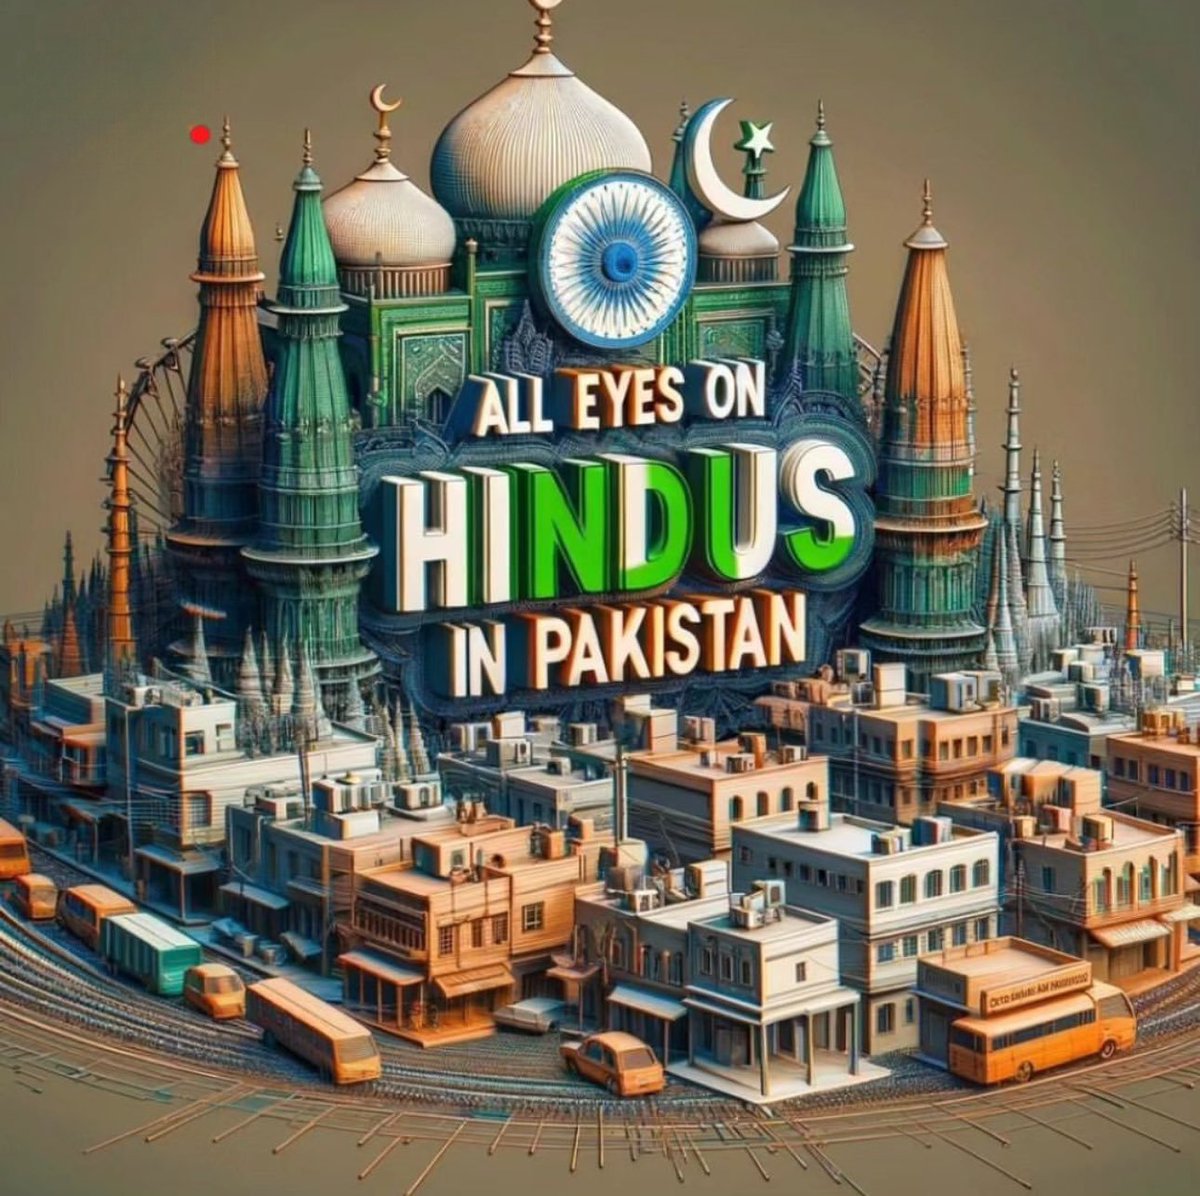 All Eyes on Hindus in Pakistan